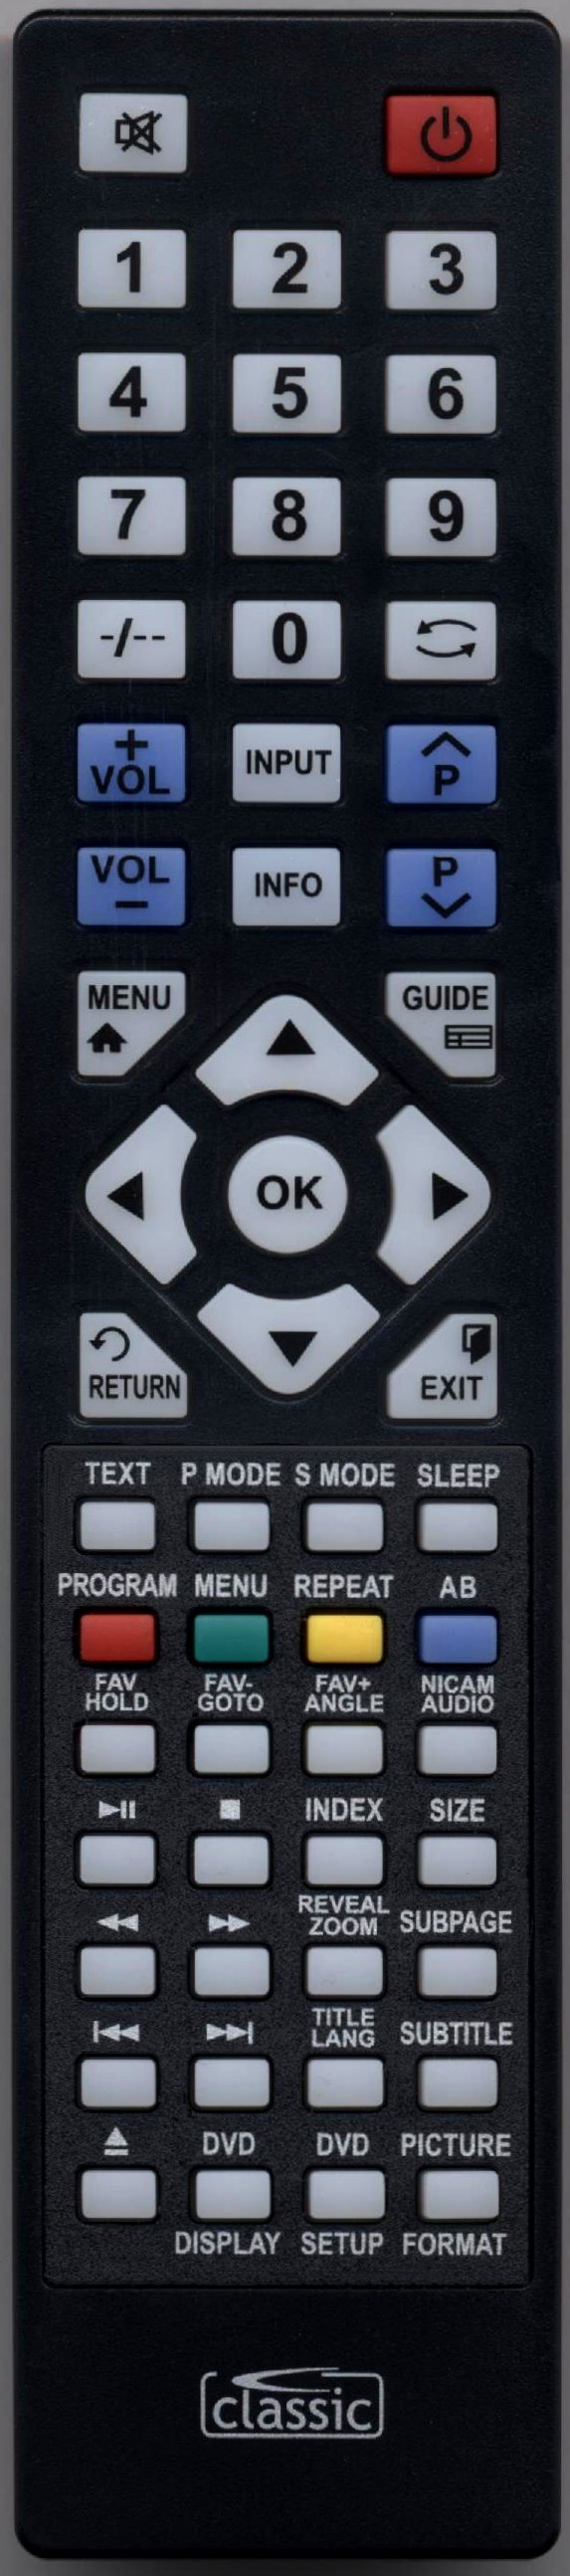 UMC X19/69C-GB-TD-DE Remote Control